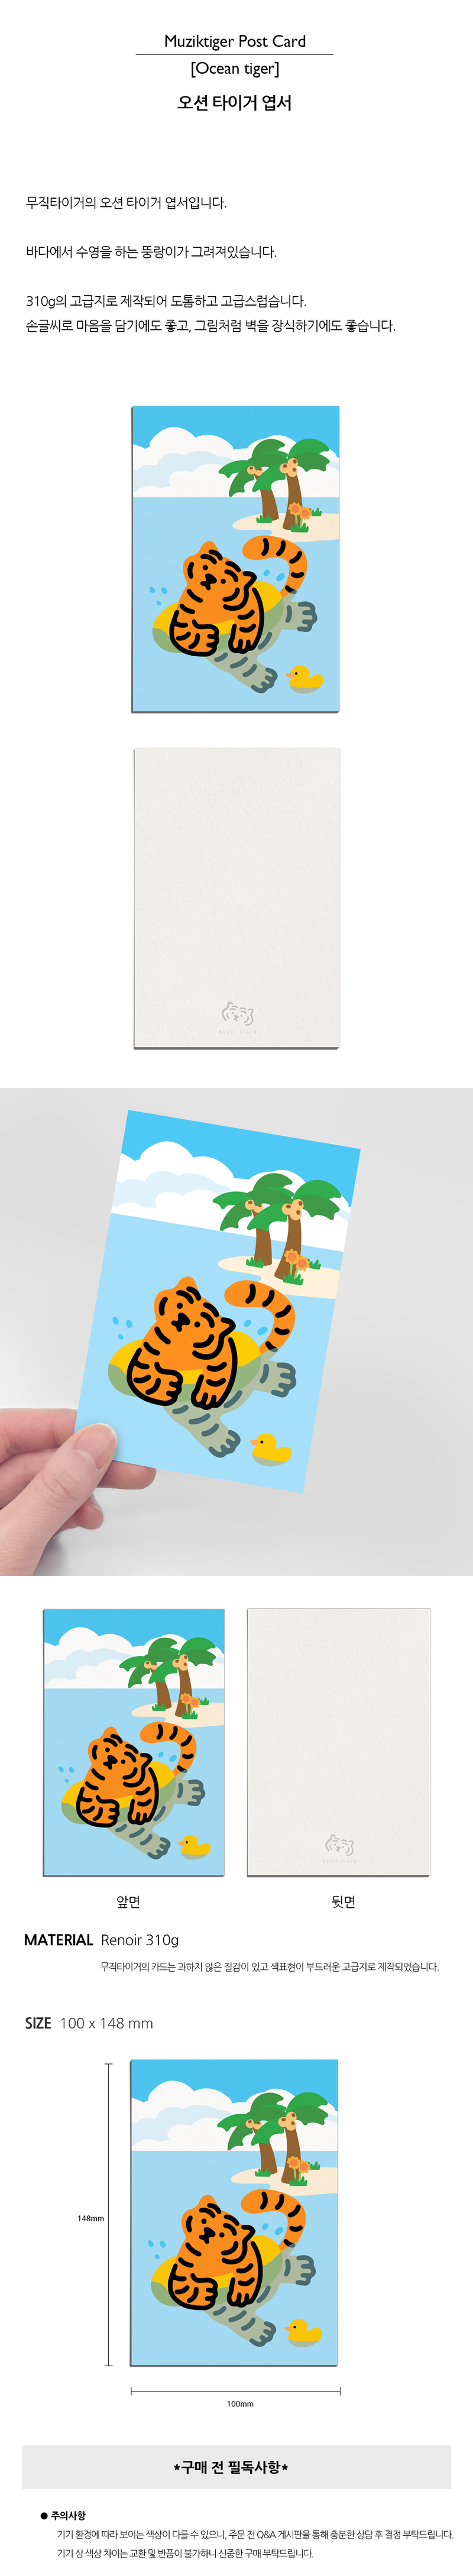 Ocean tiger ポストカード